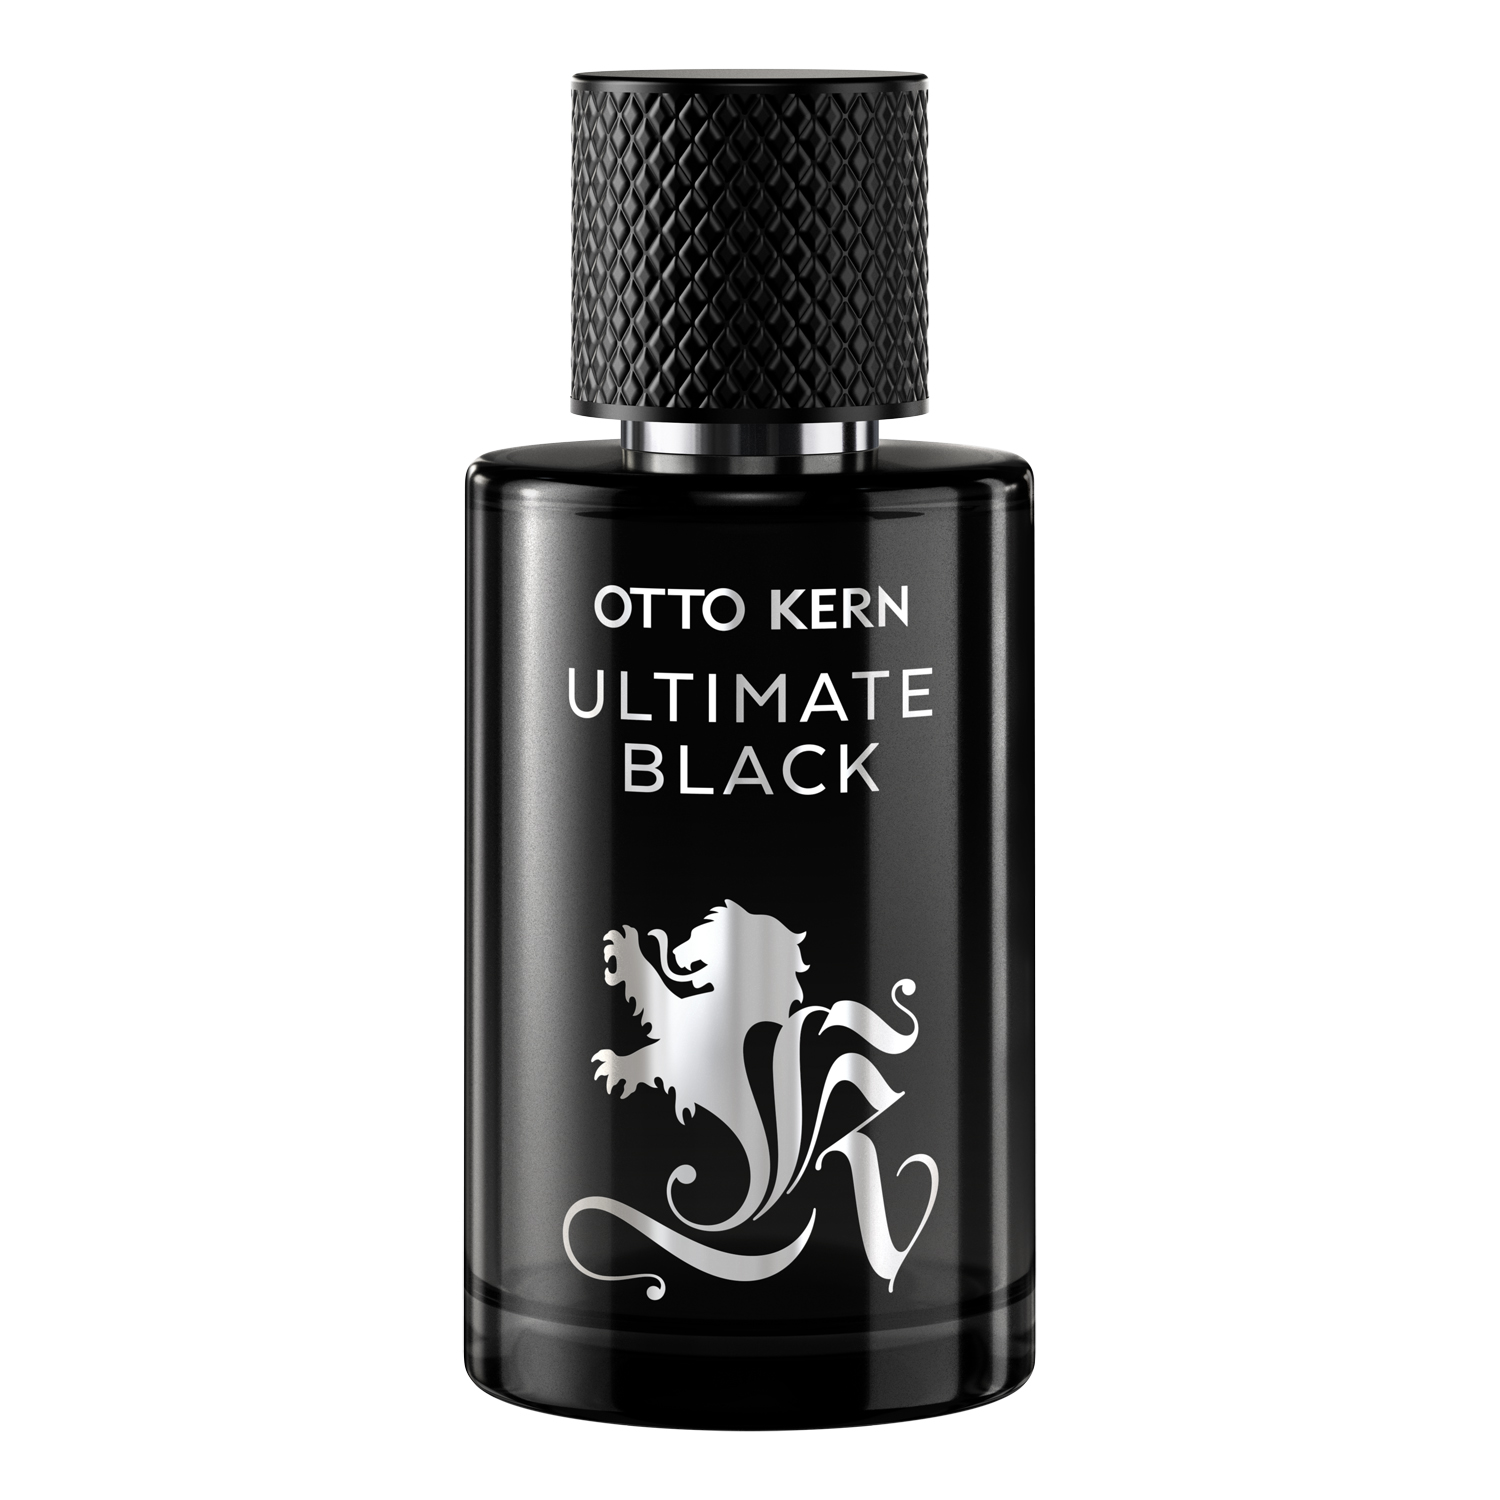 Otto Kern Ultimate Black Eau de Toilette 50ml